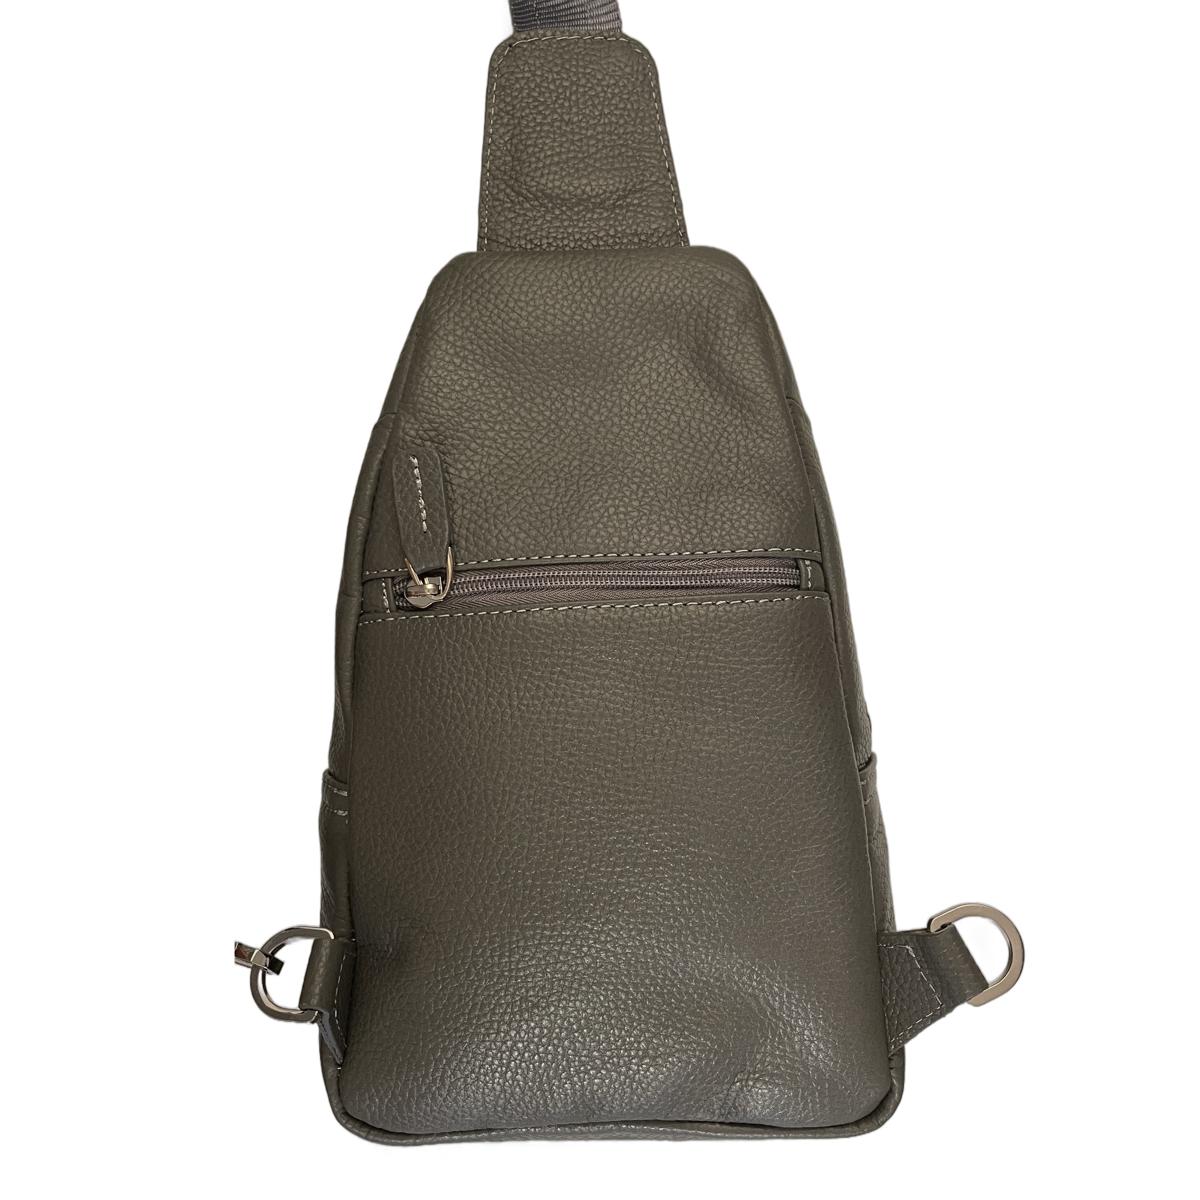 LeatherLuxe - Genuine Leather Unisex Sling Bag Shoulder 